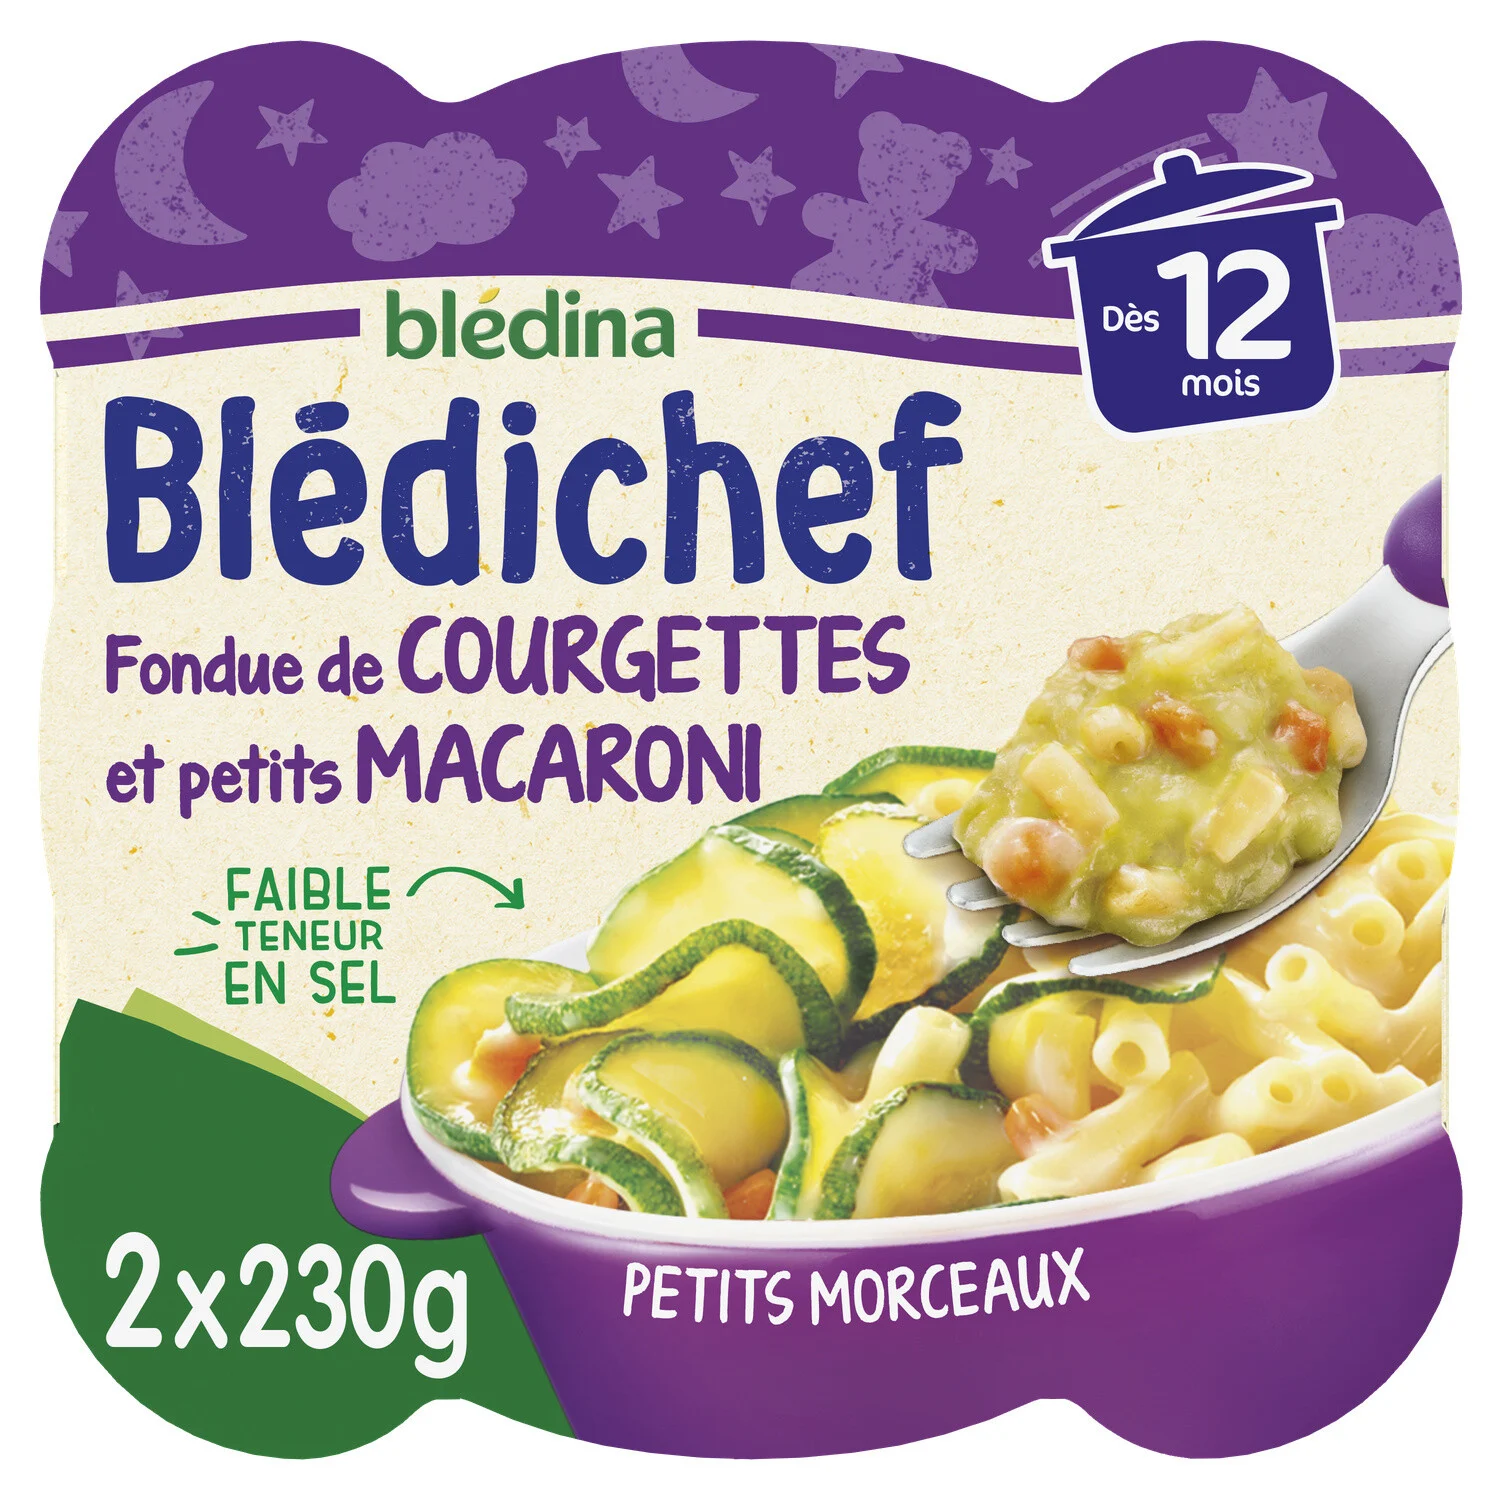 Bledina Bledichef Courgettes fondue & Macaroni pasta 2x230g from 12 months